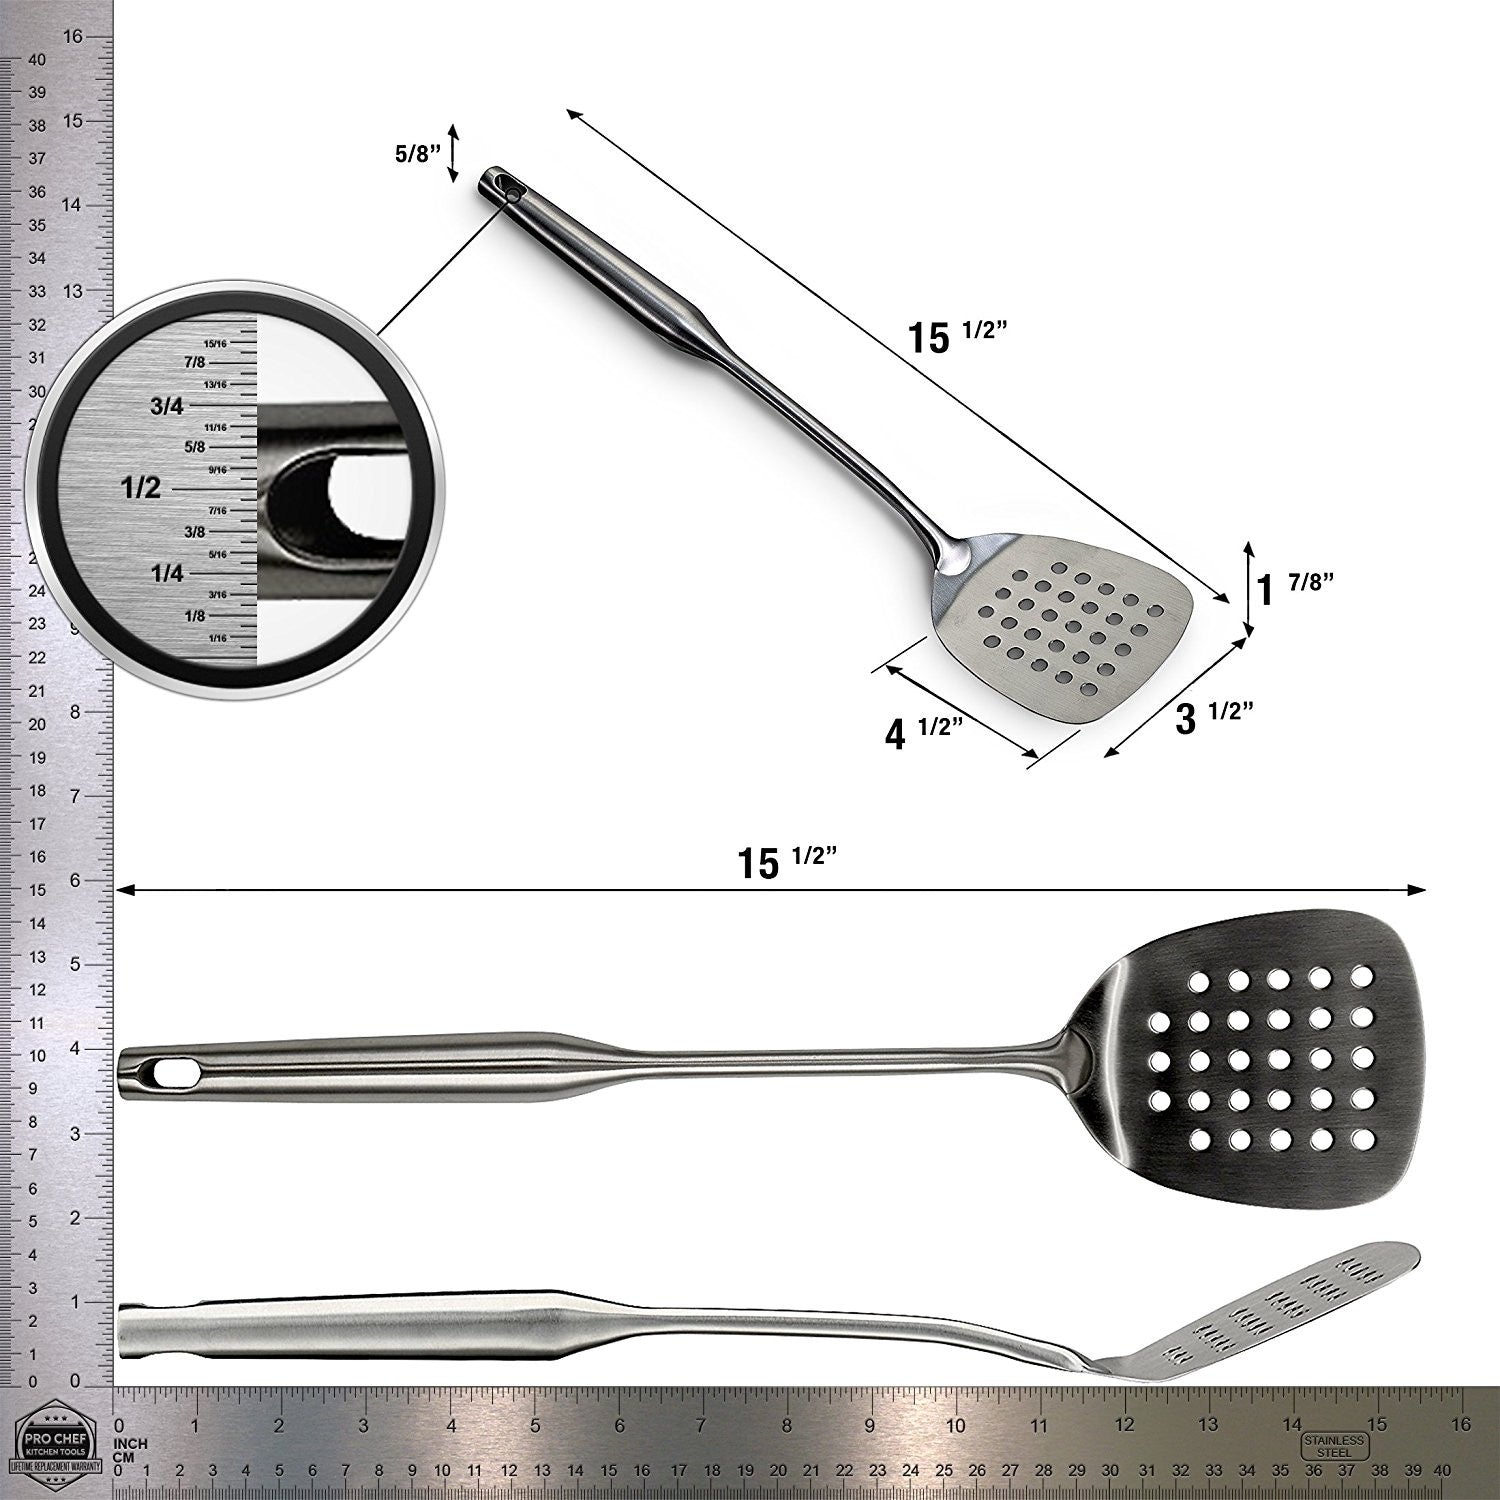 Metal spatula flipper : r/HelpMeFind